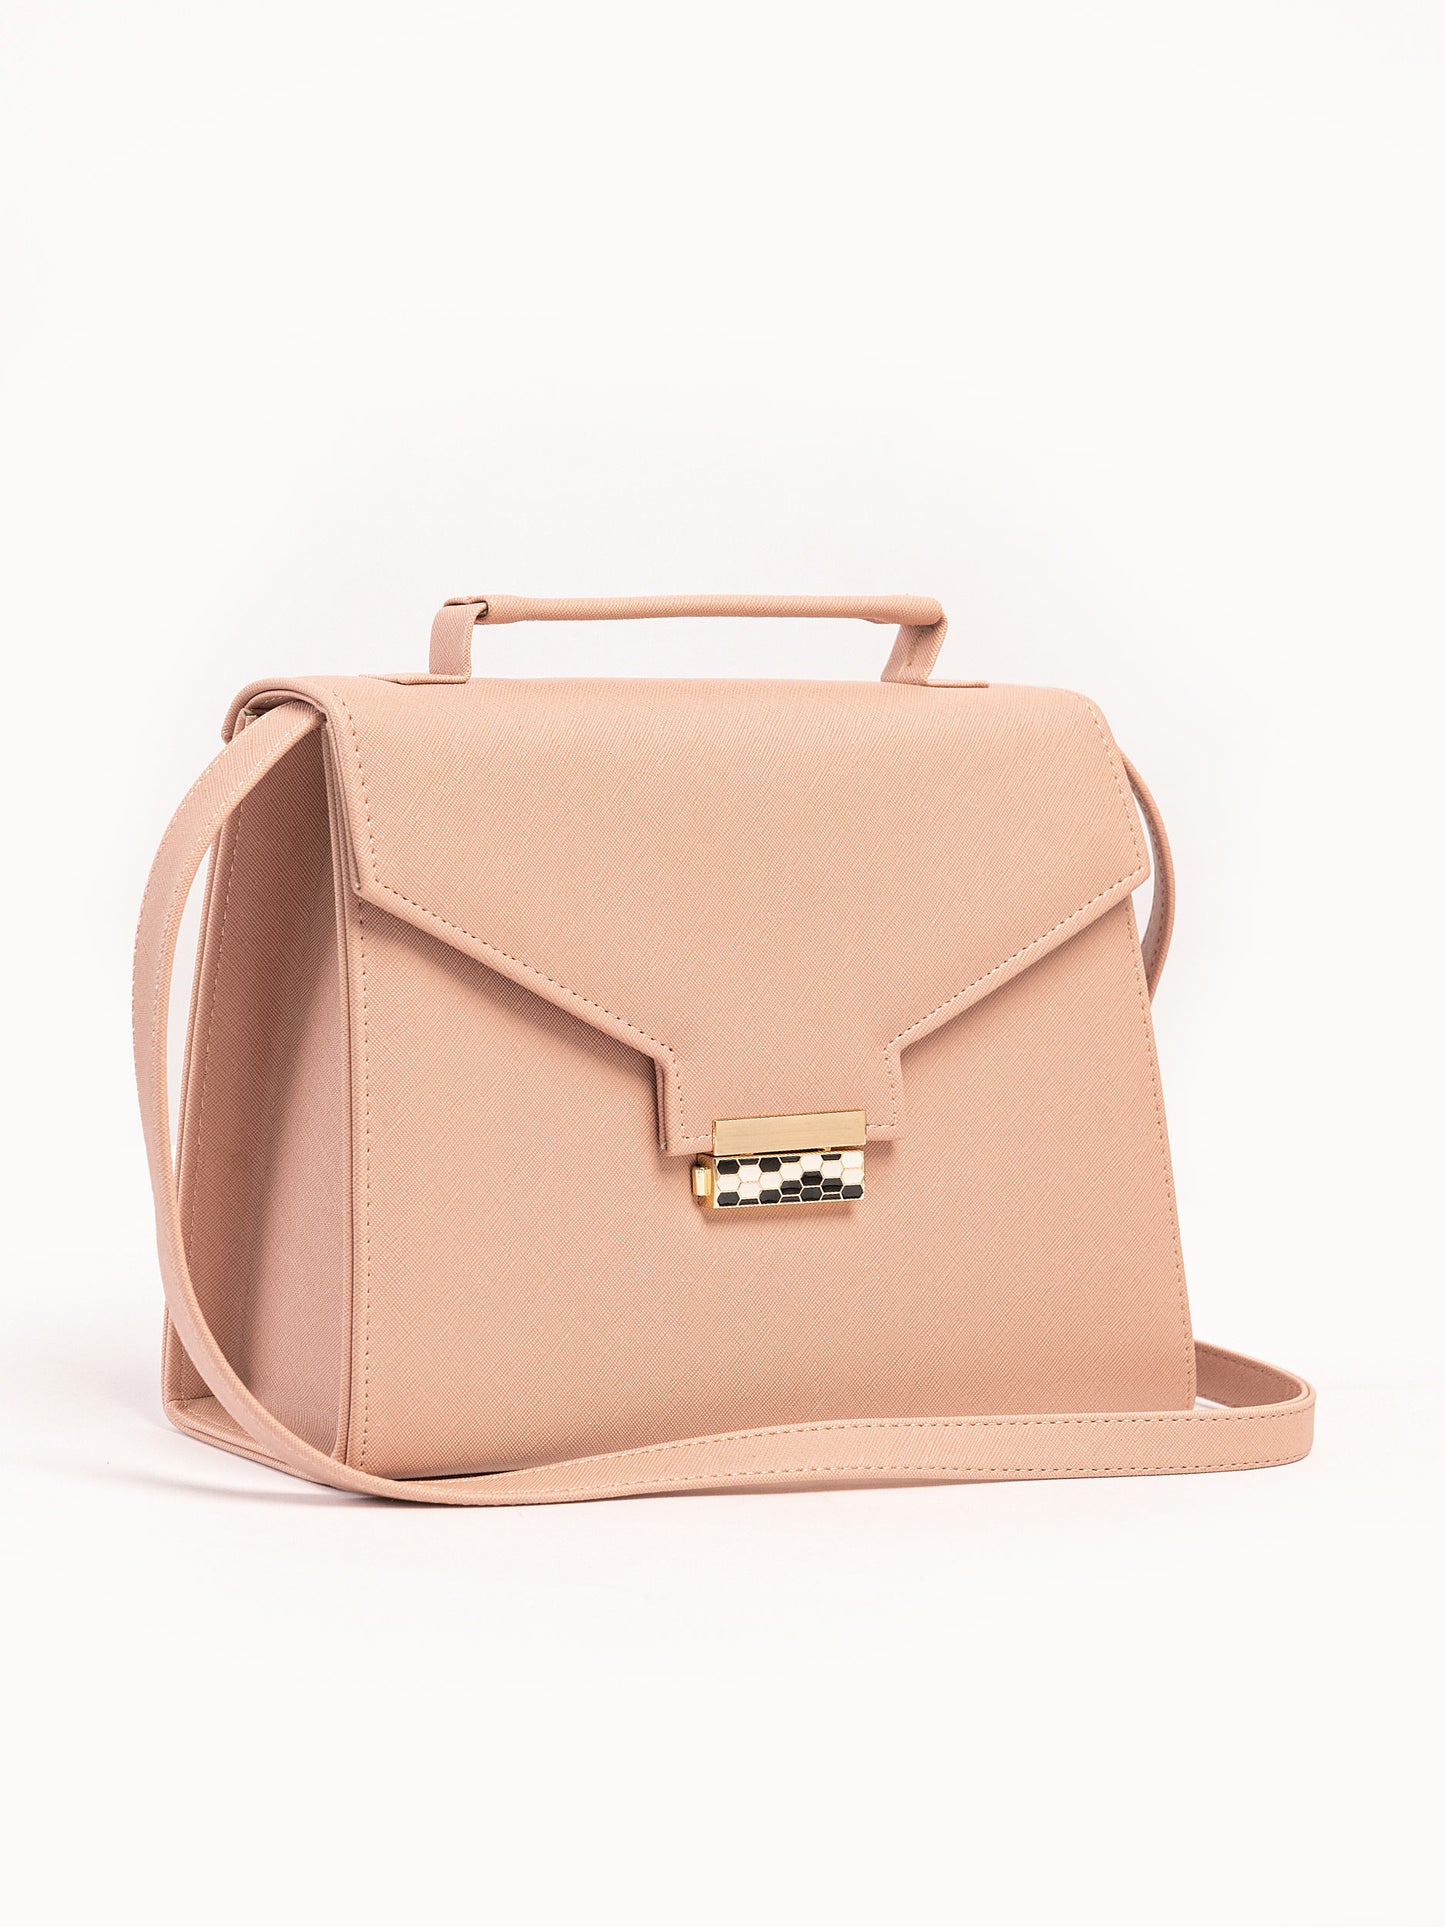 Honeycomb Box Style Handbag